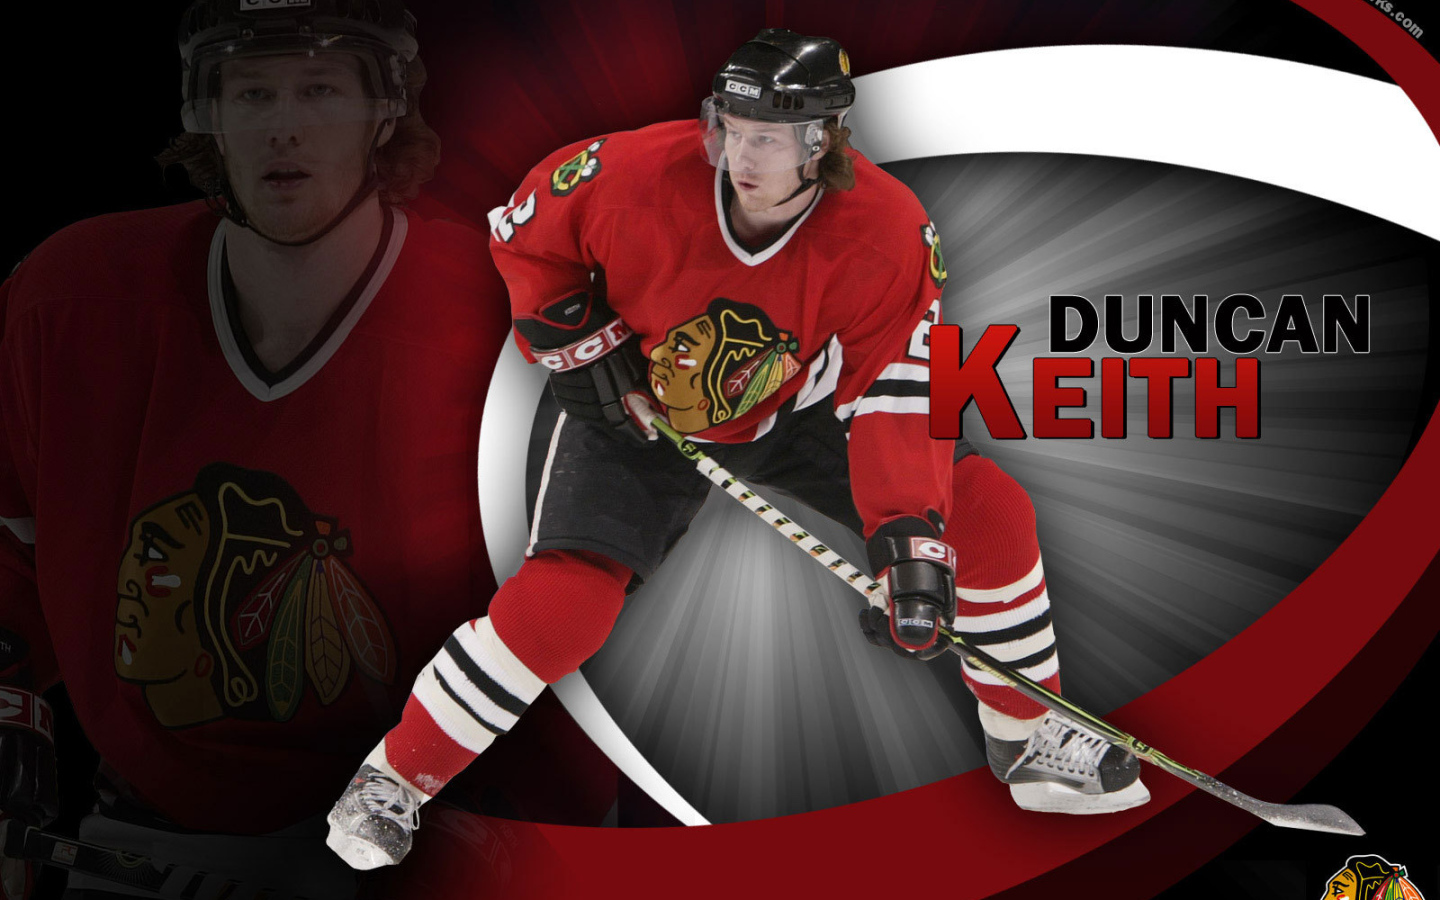 Popular Hockey player Duncan Keith